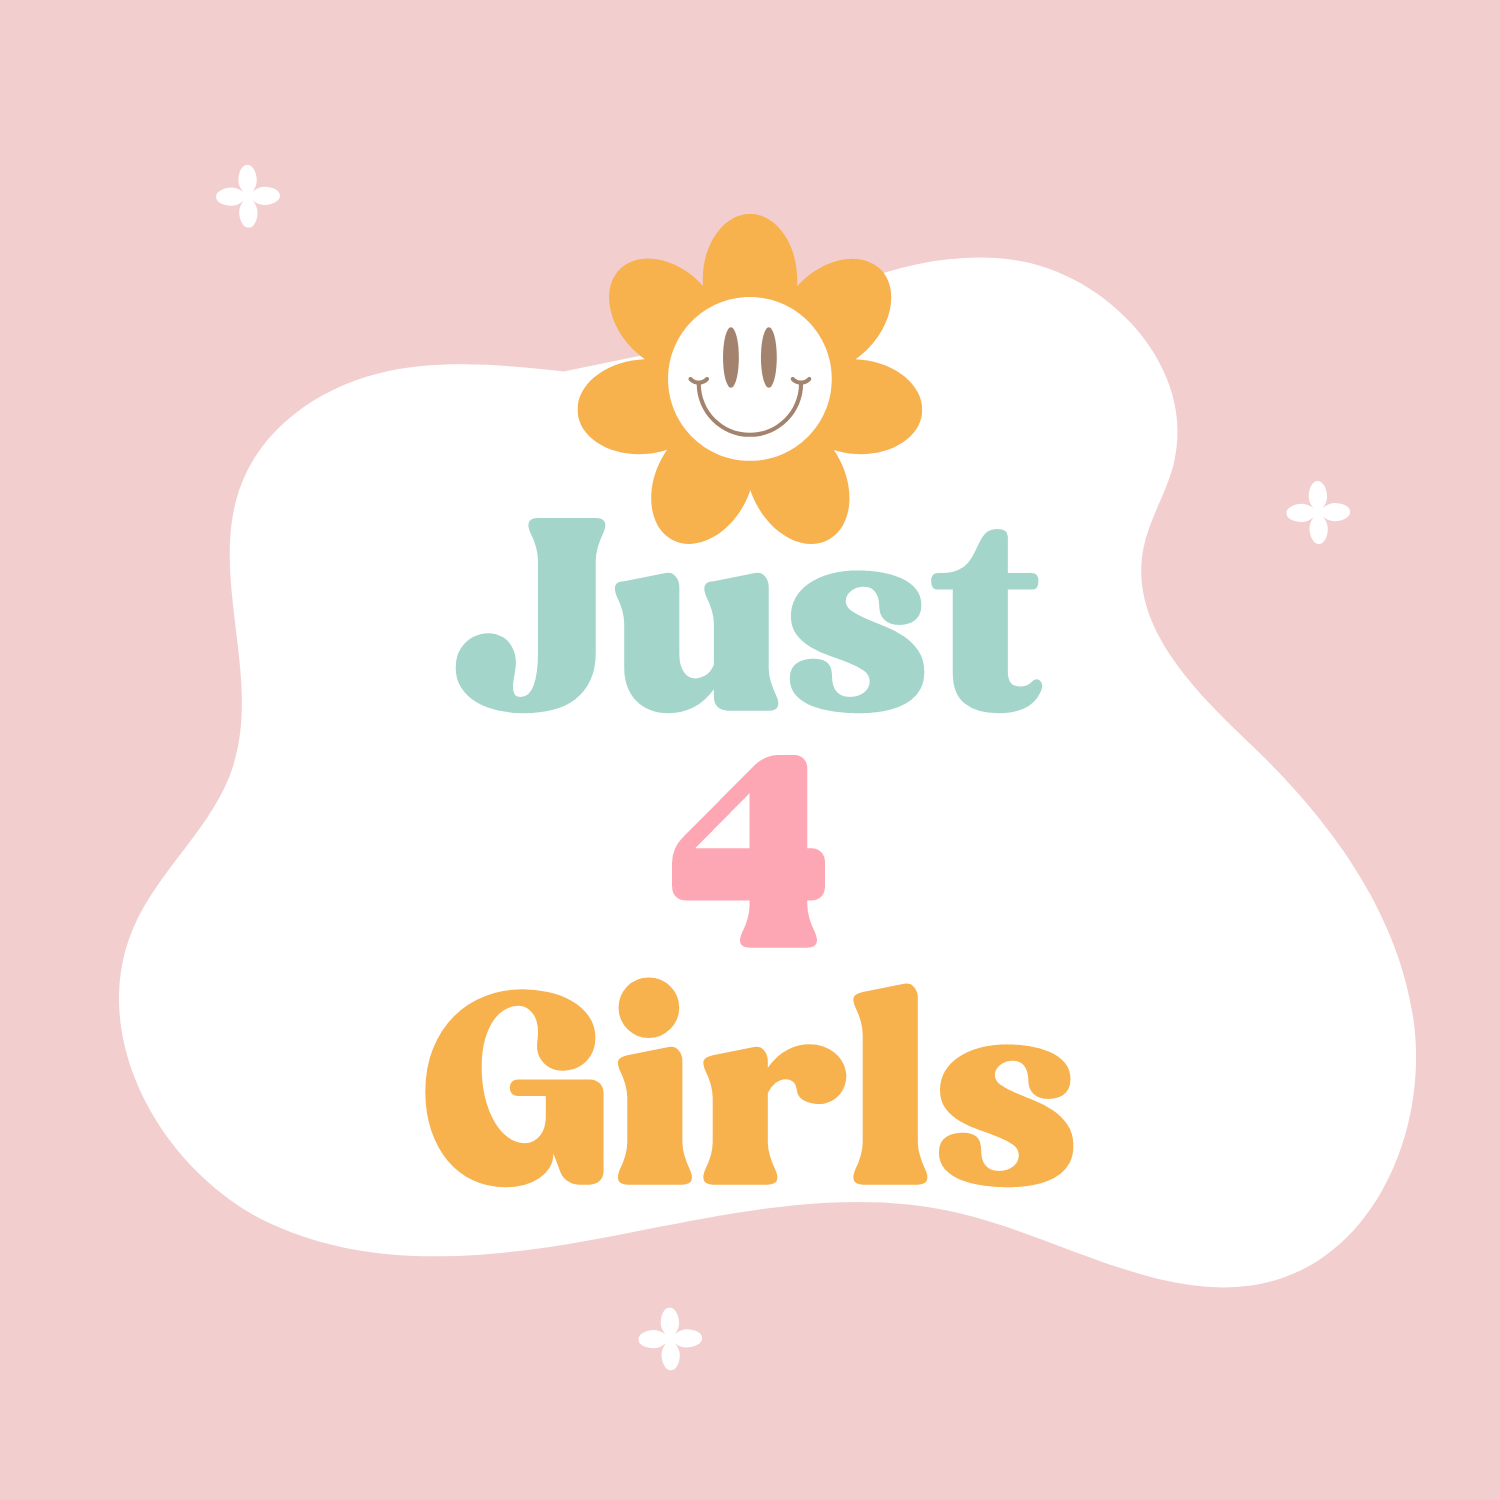 Just 4 Girls